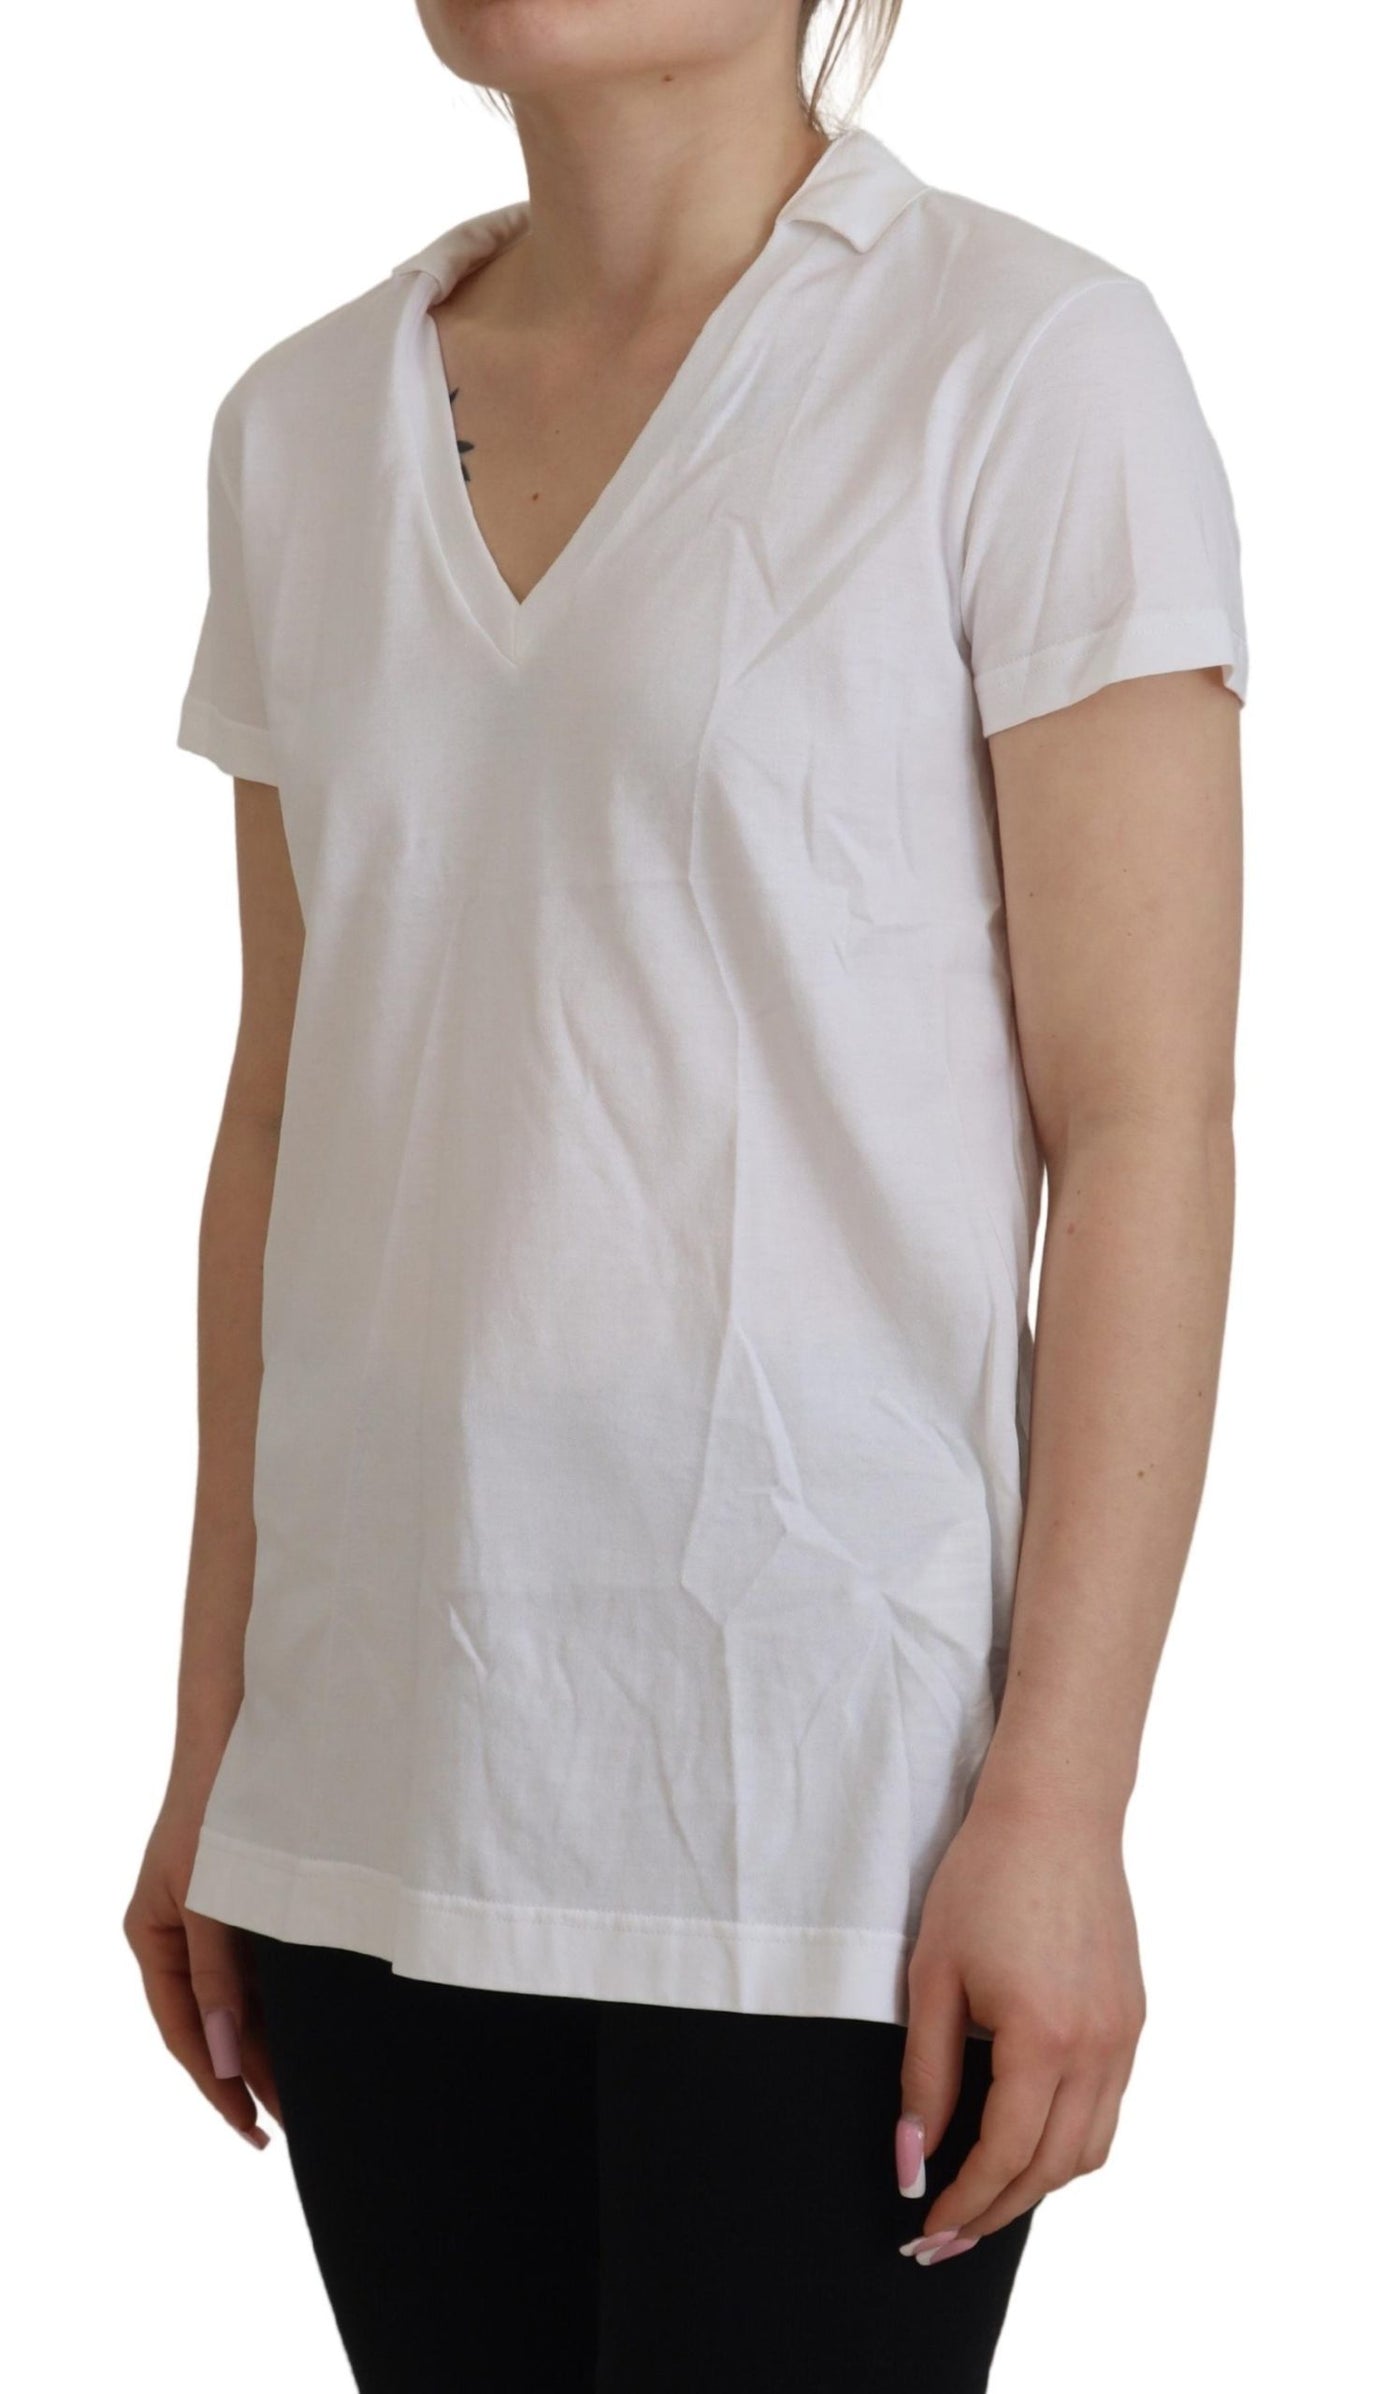 Dolce & Gabbana White Short Sleeve V-neck Cotton Top Blouse T-shirt